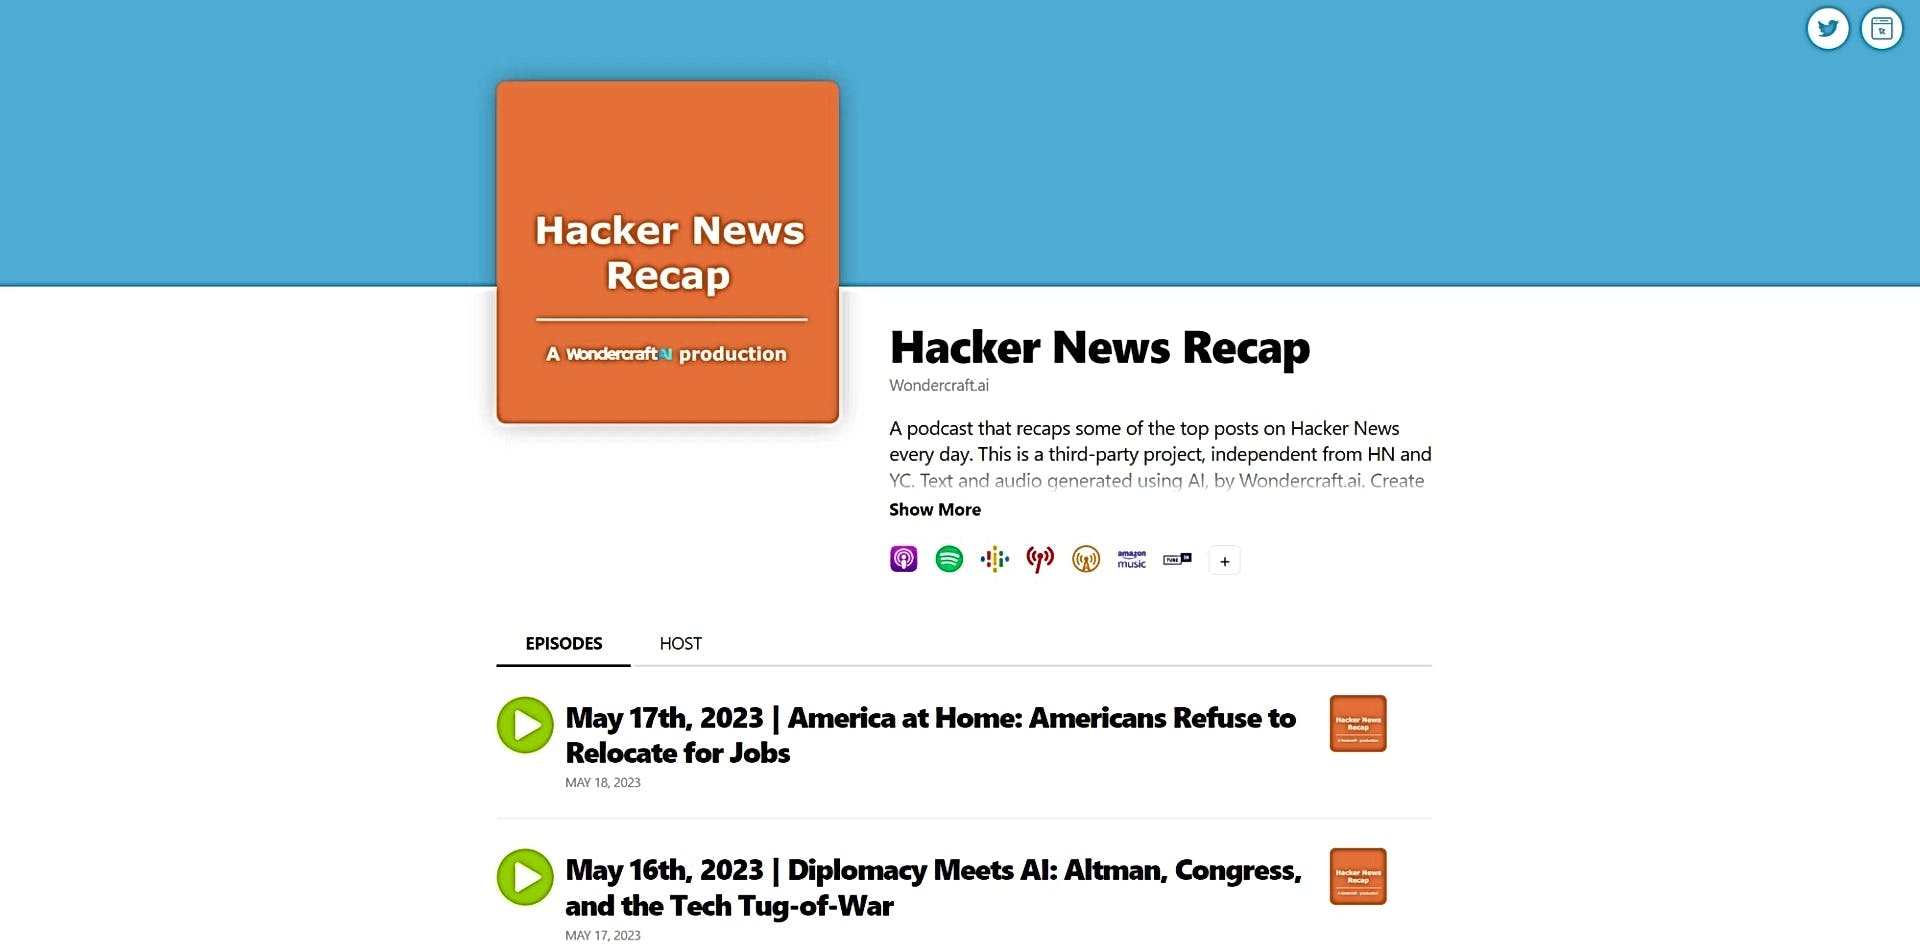 Hacker News Recap featured